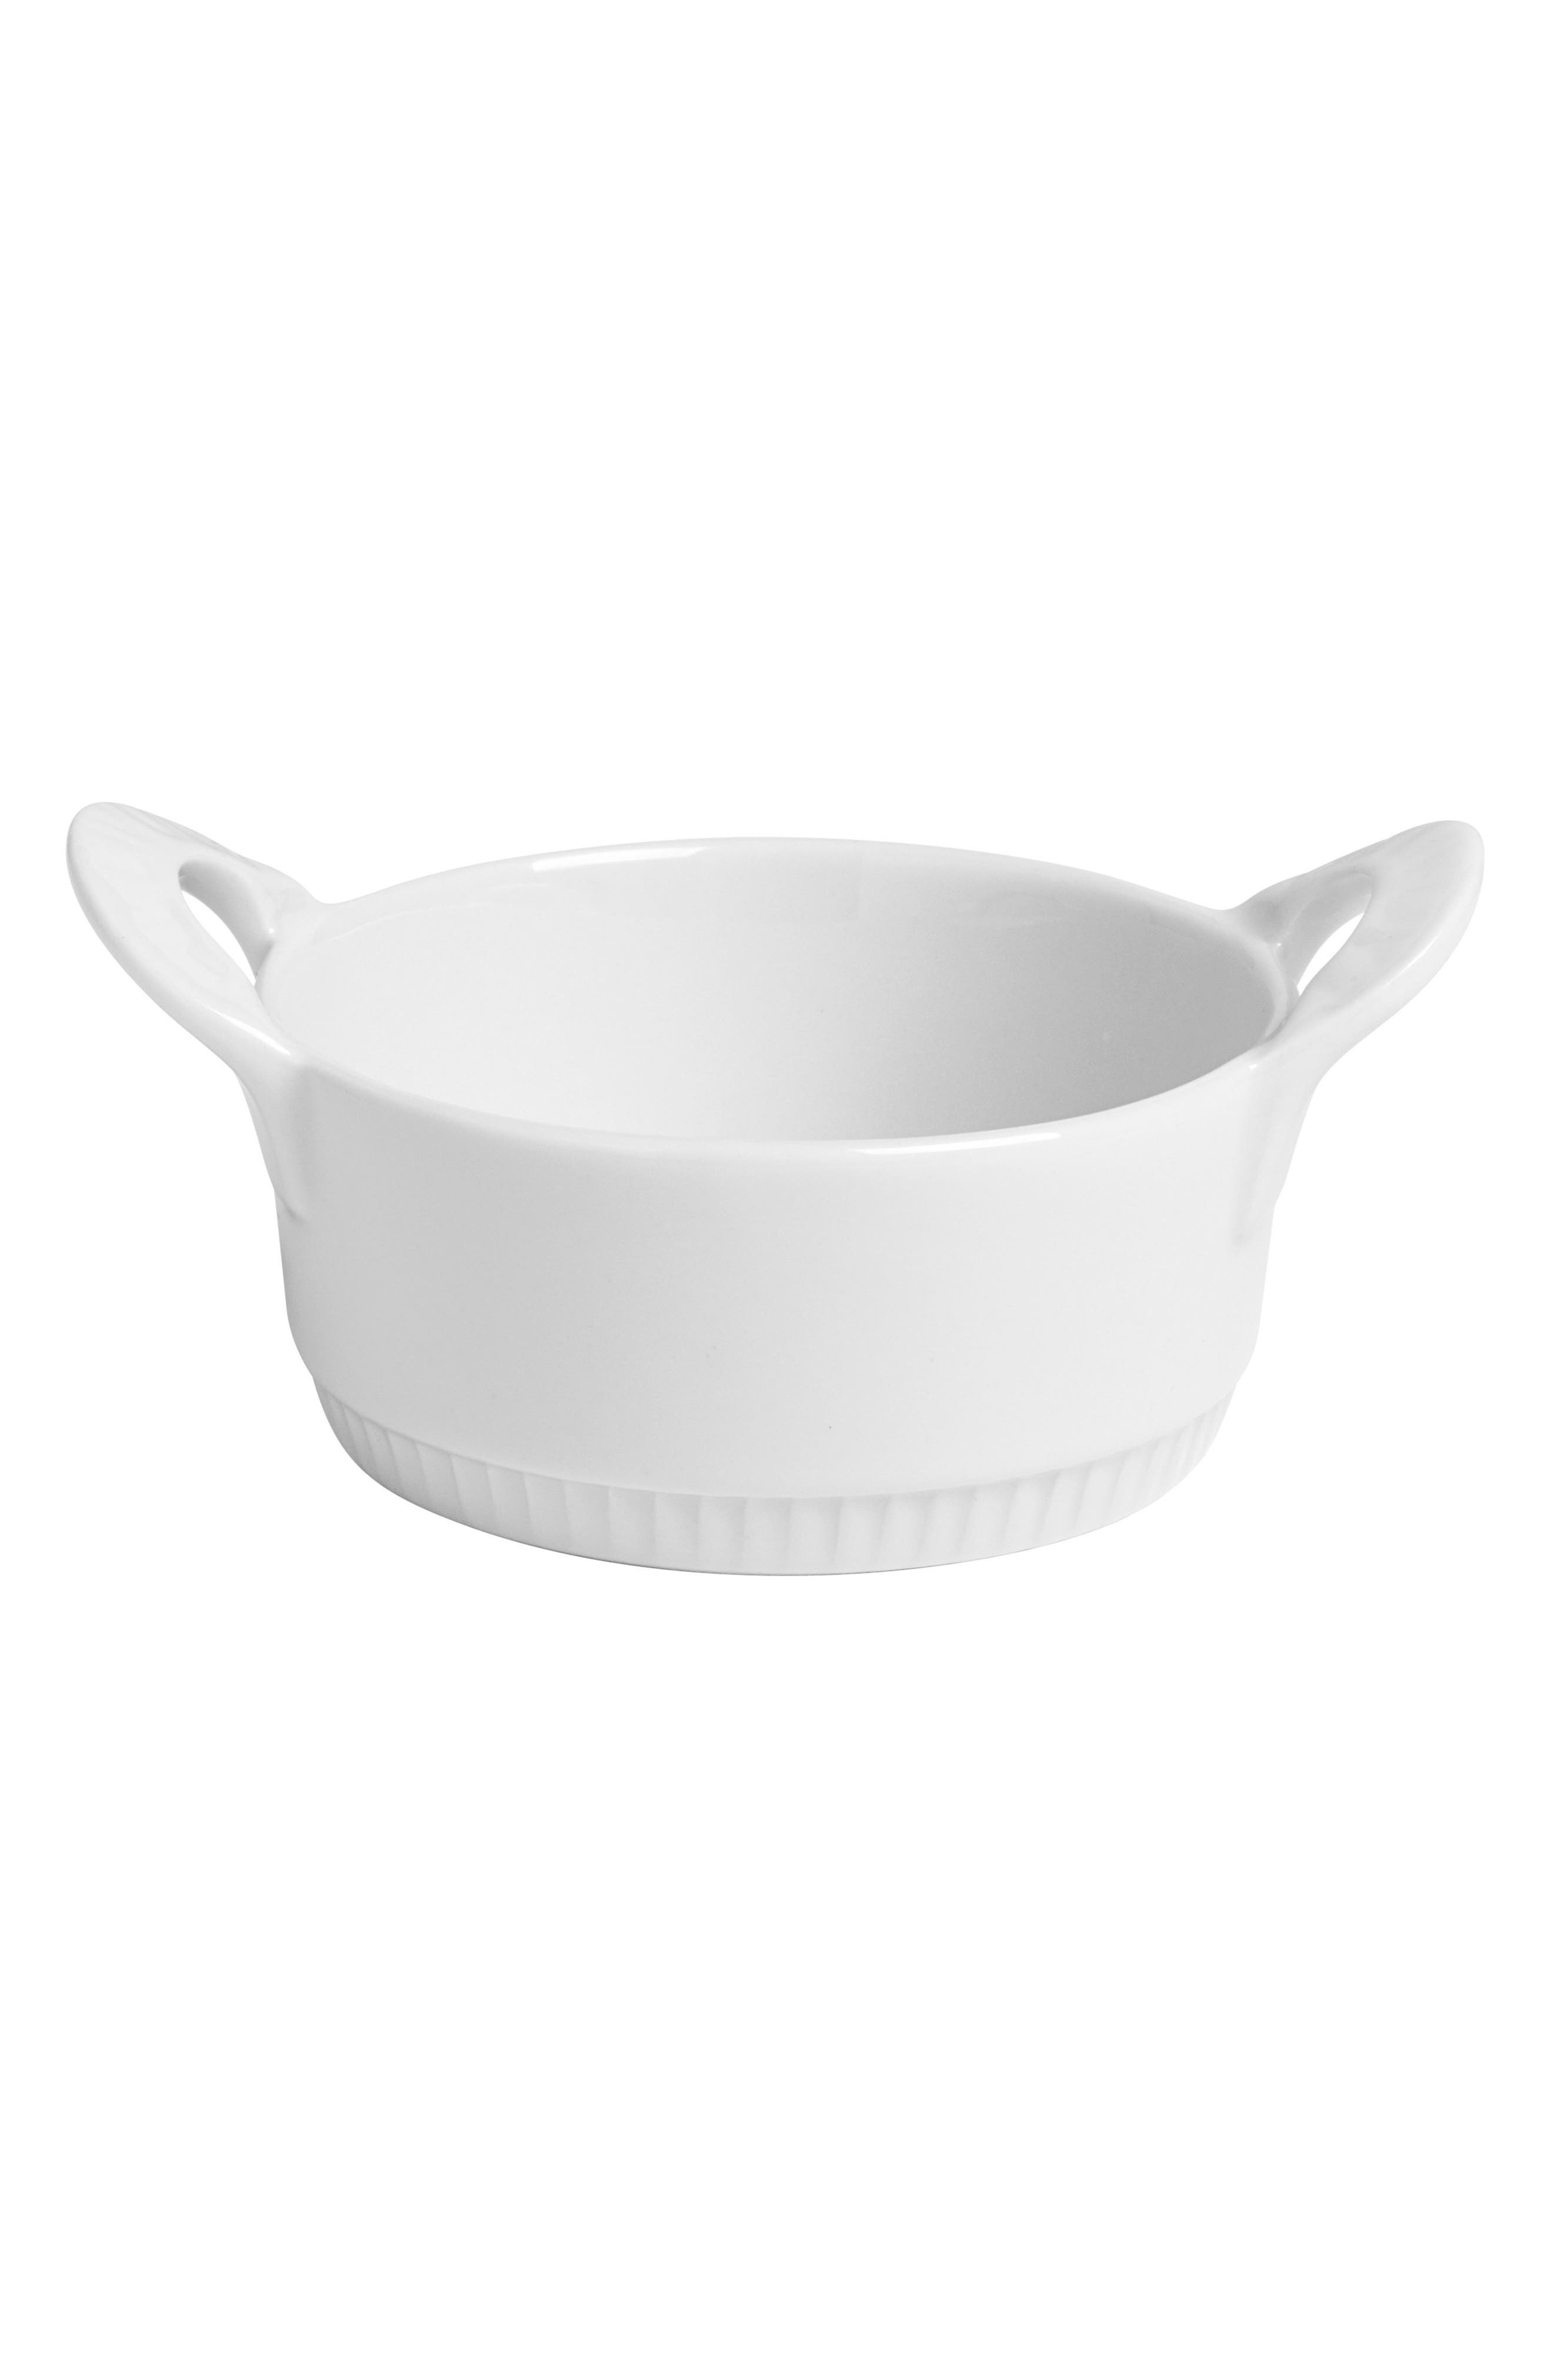 Housewares International Ceramic Bakeware Dish 7.5" Round Le Petite Baker Ivory 